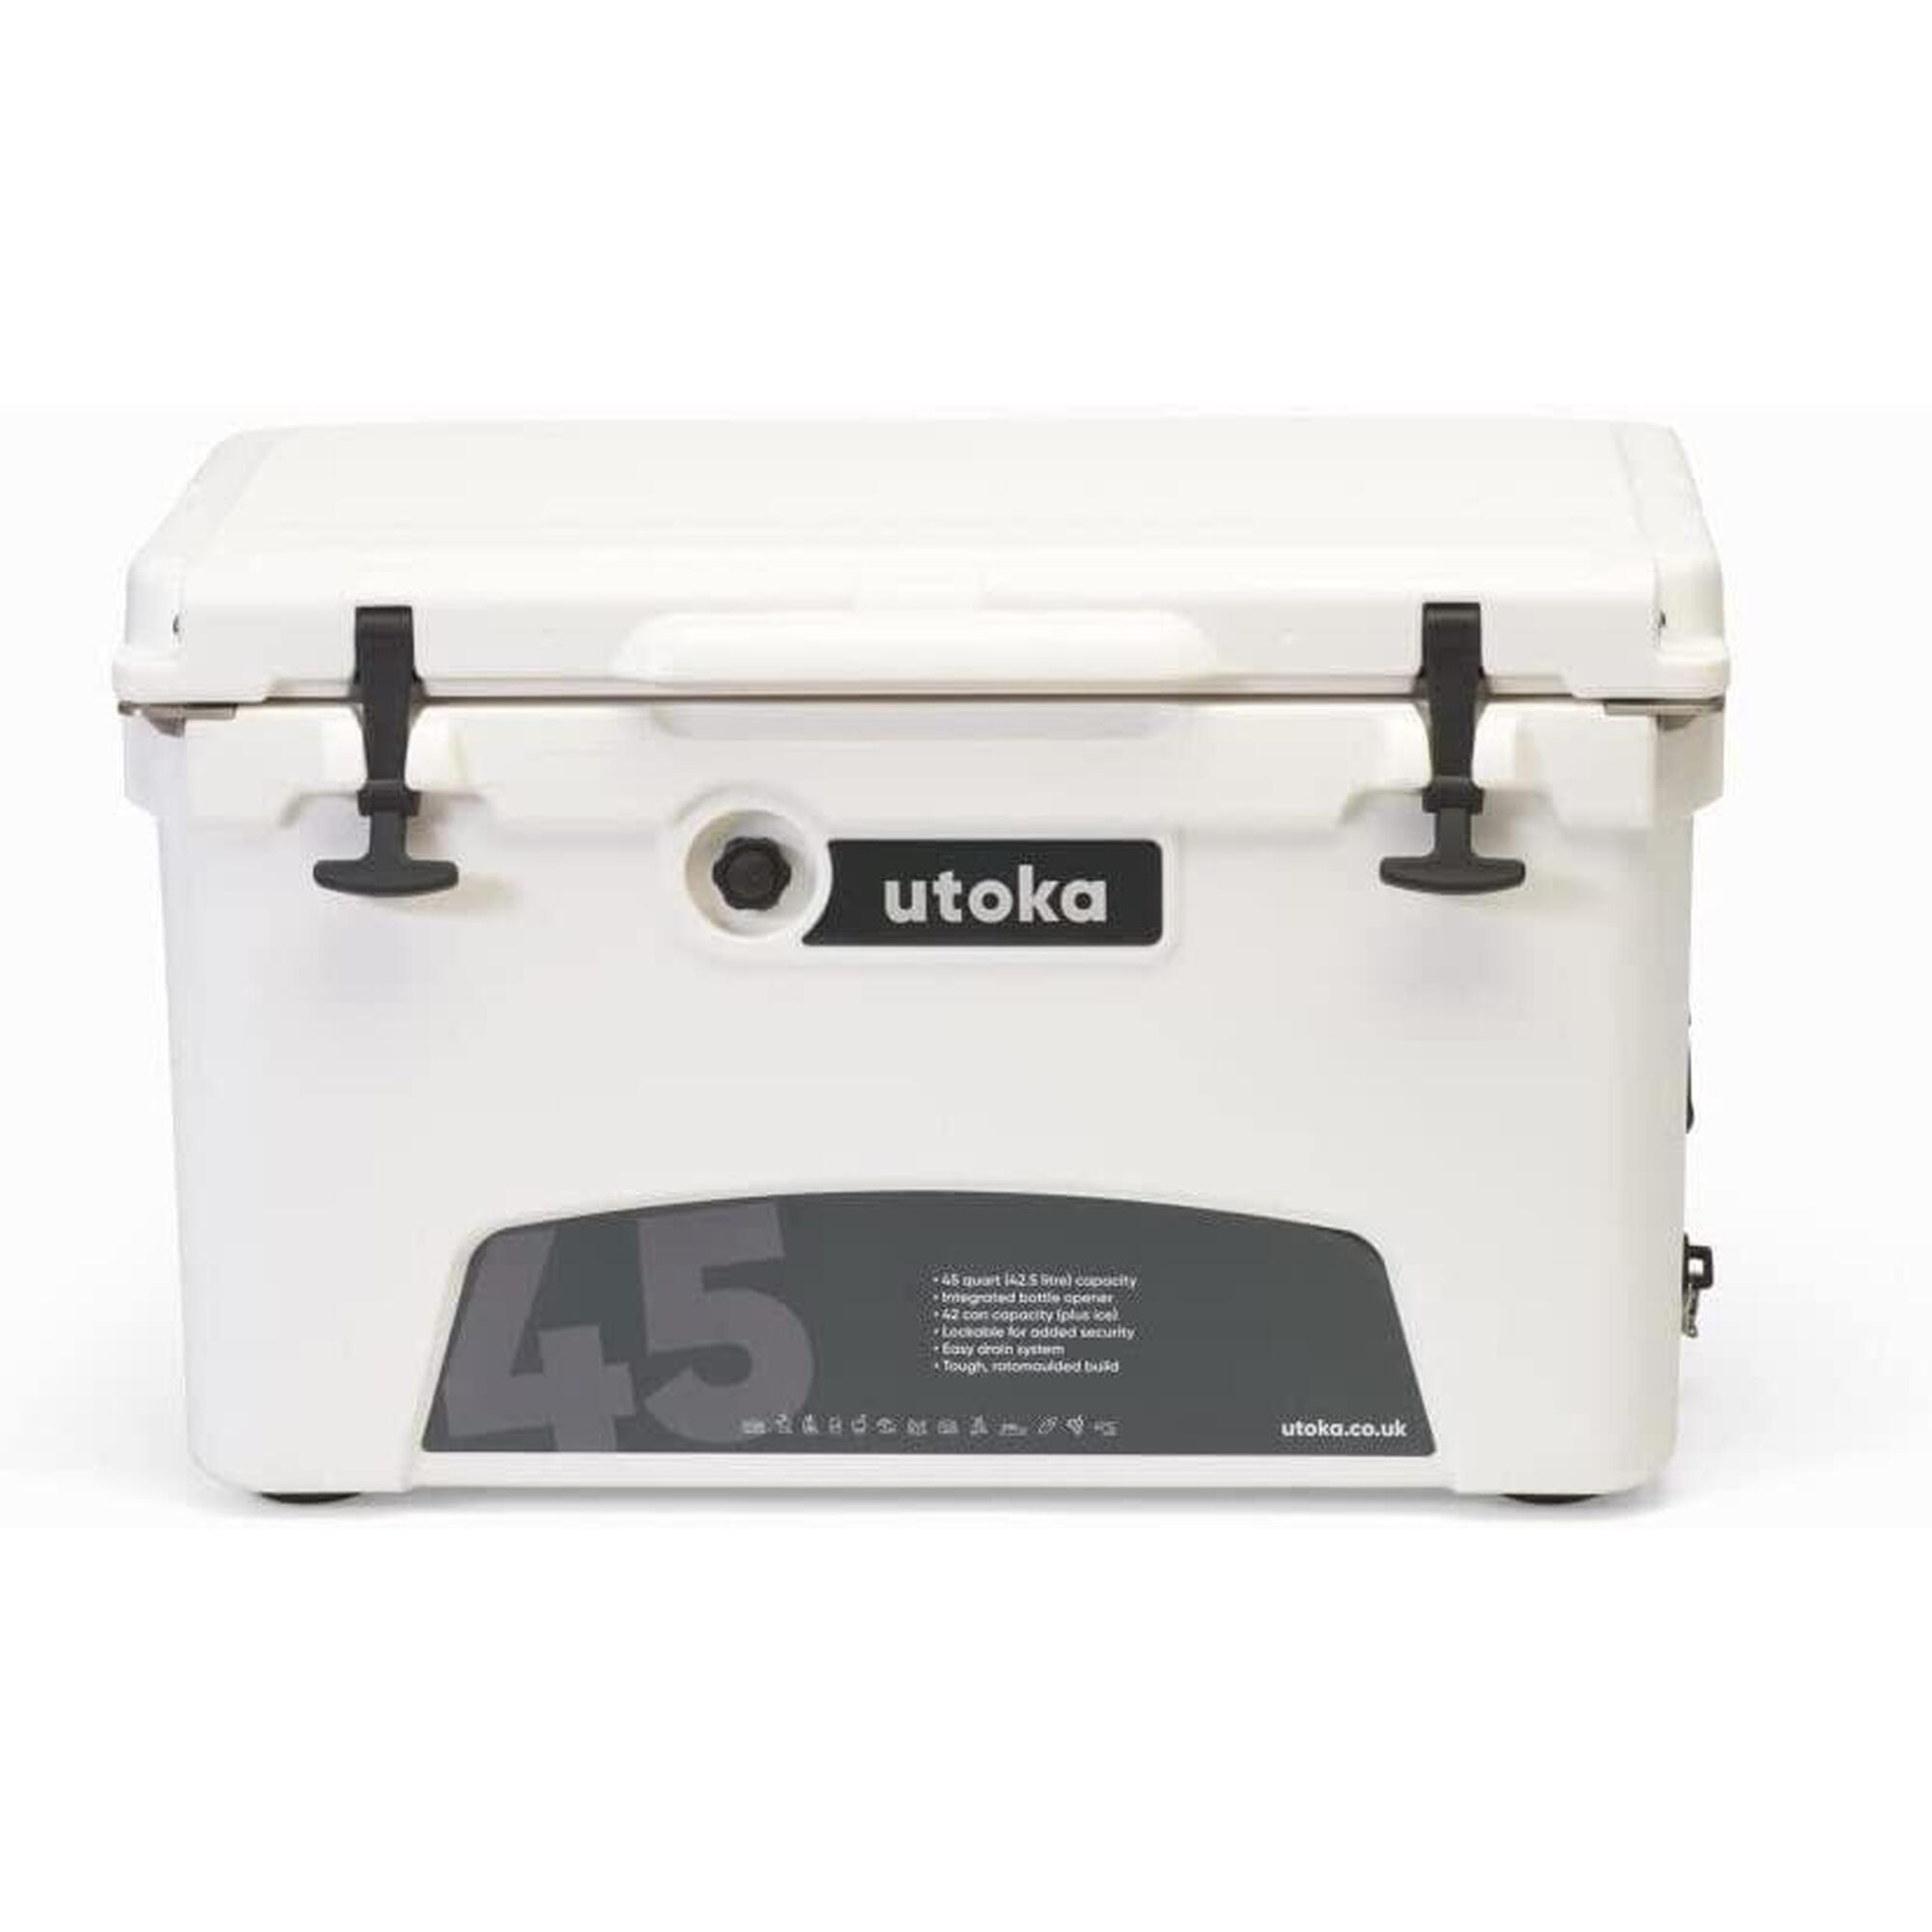 UTOKA Utoka 45 Cooler, Portable Hard Cool box With Carry Handle - White